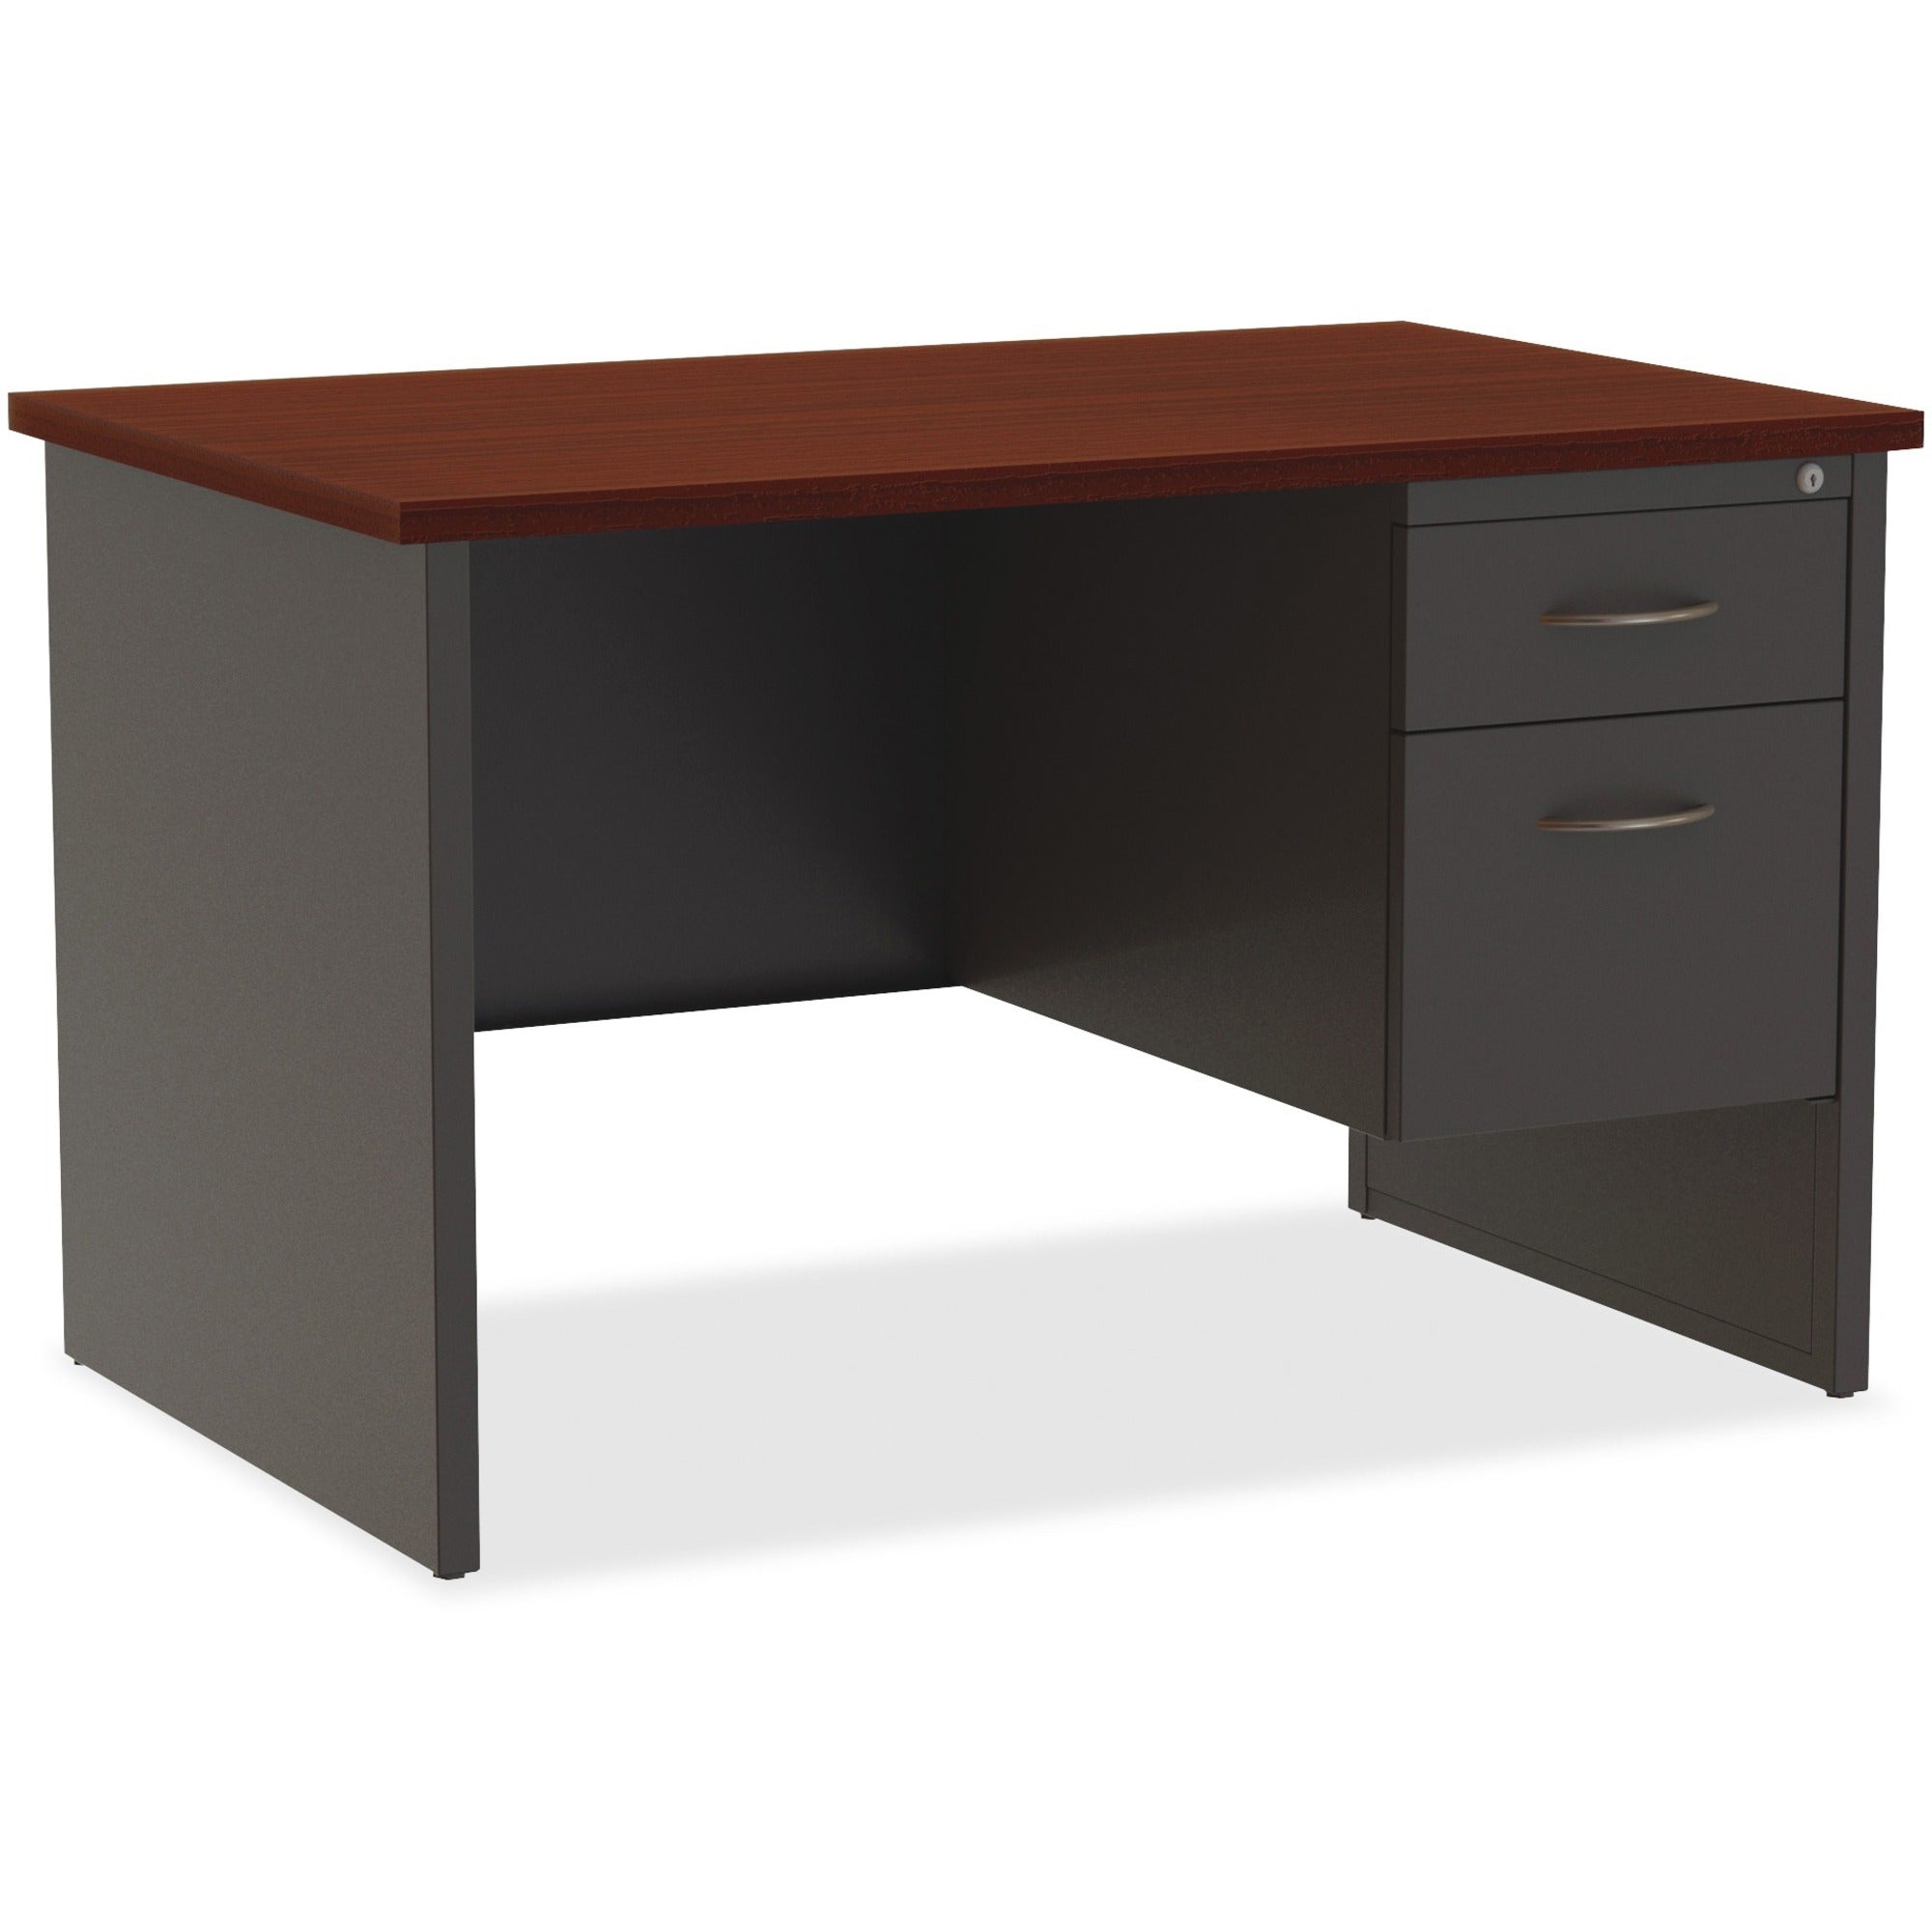 Mahogany Laminate/Charcoal Modular Desk Series Pedestal Desk - 2-Drawer